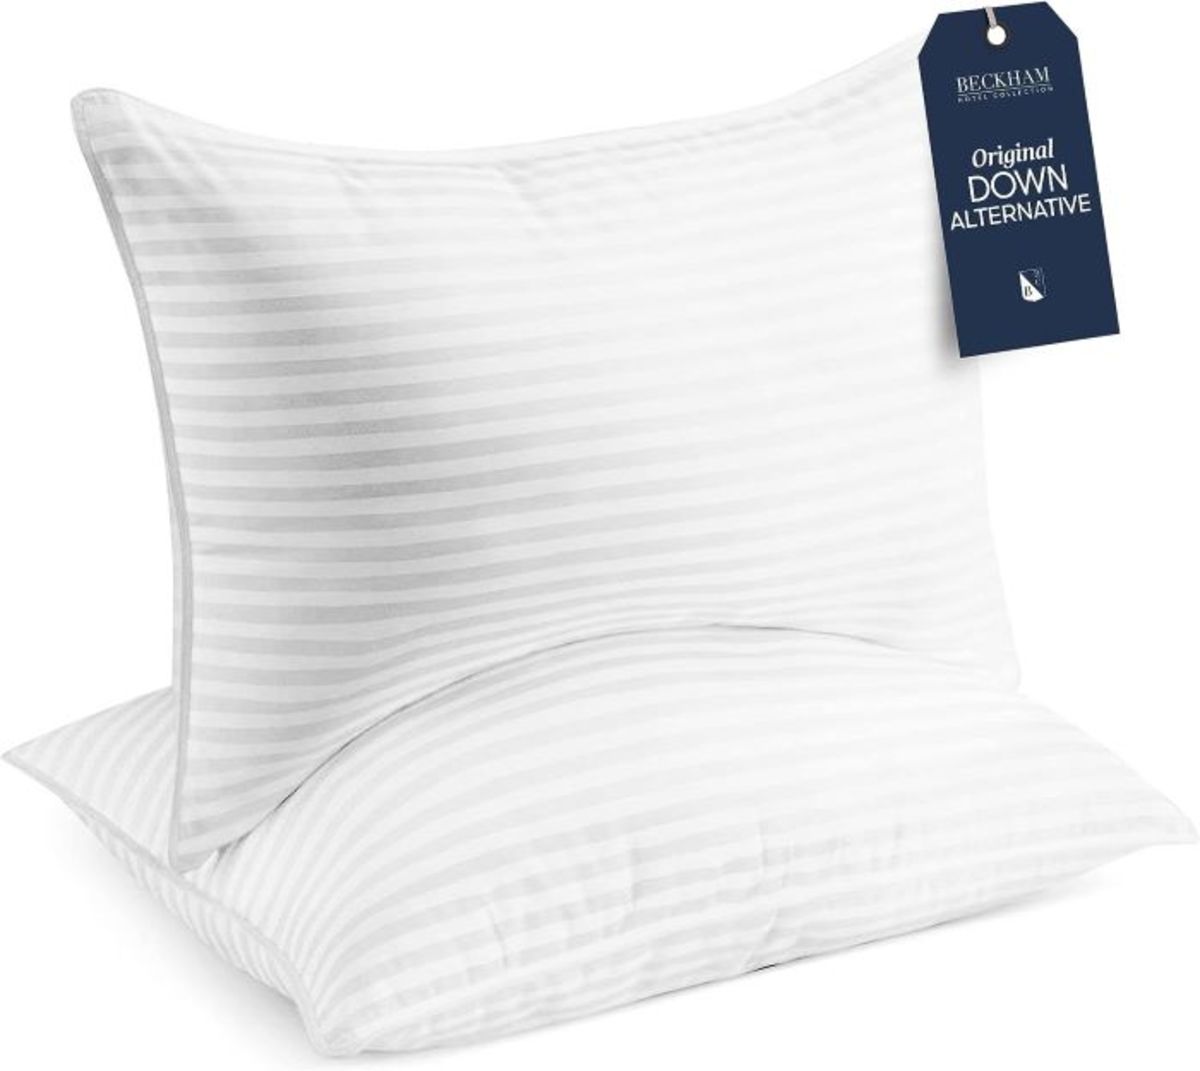 https://www.thestreet.com/.image/t_share/MjAxMzA4NDAxMjAyODk4NDU5/amazon-october-prime-day-beckham-bed-pillows.jpg